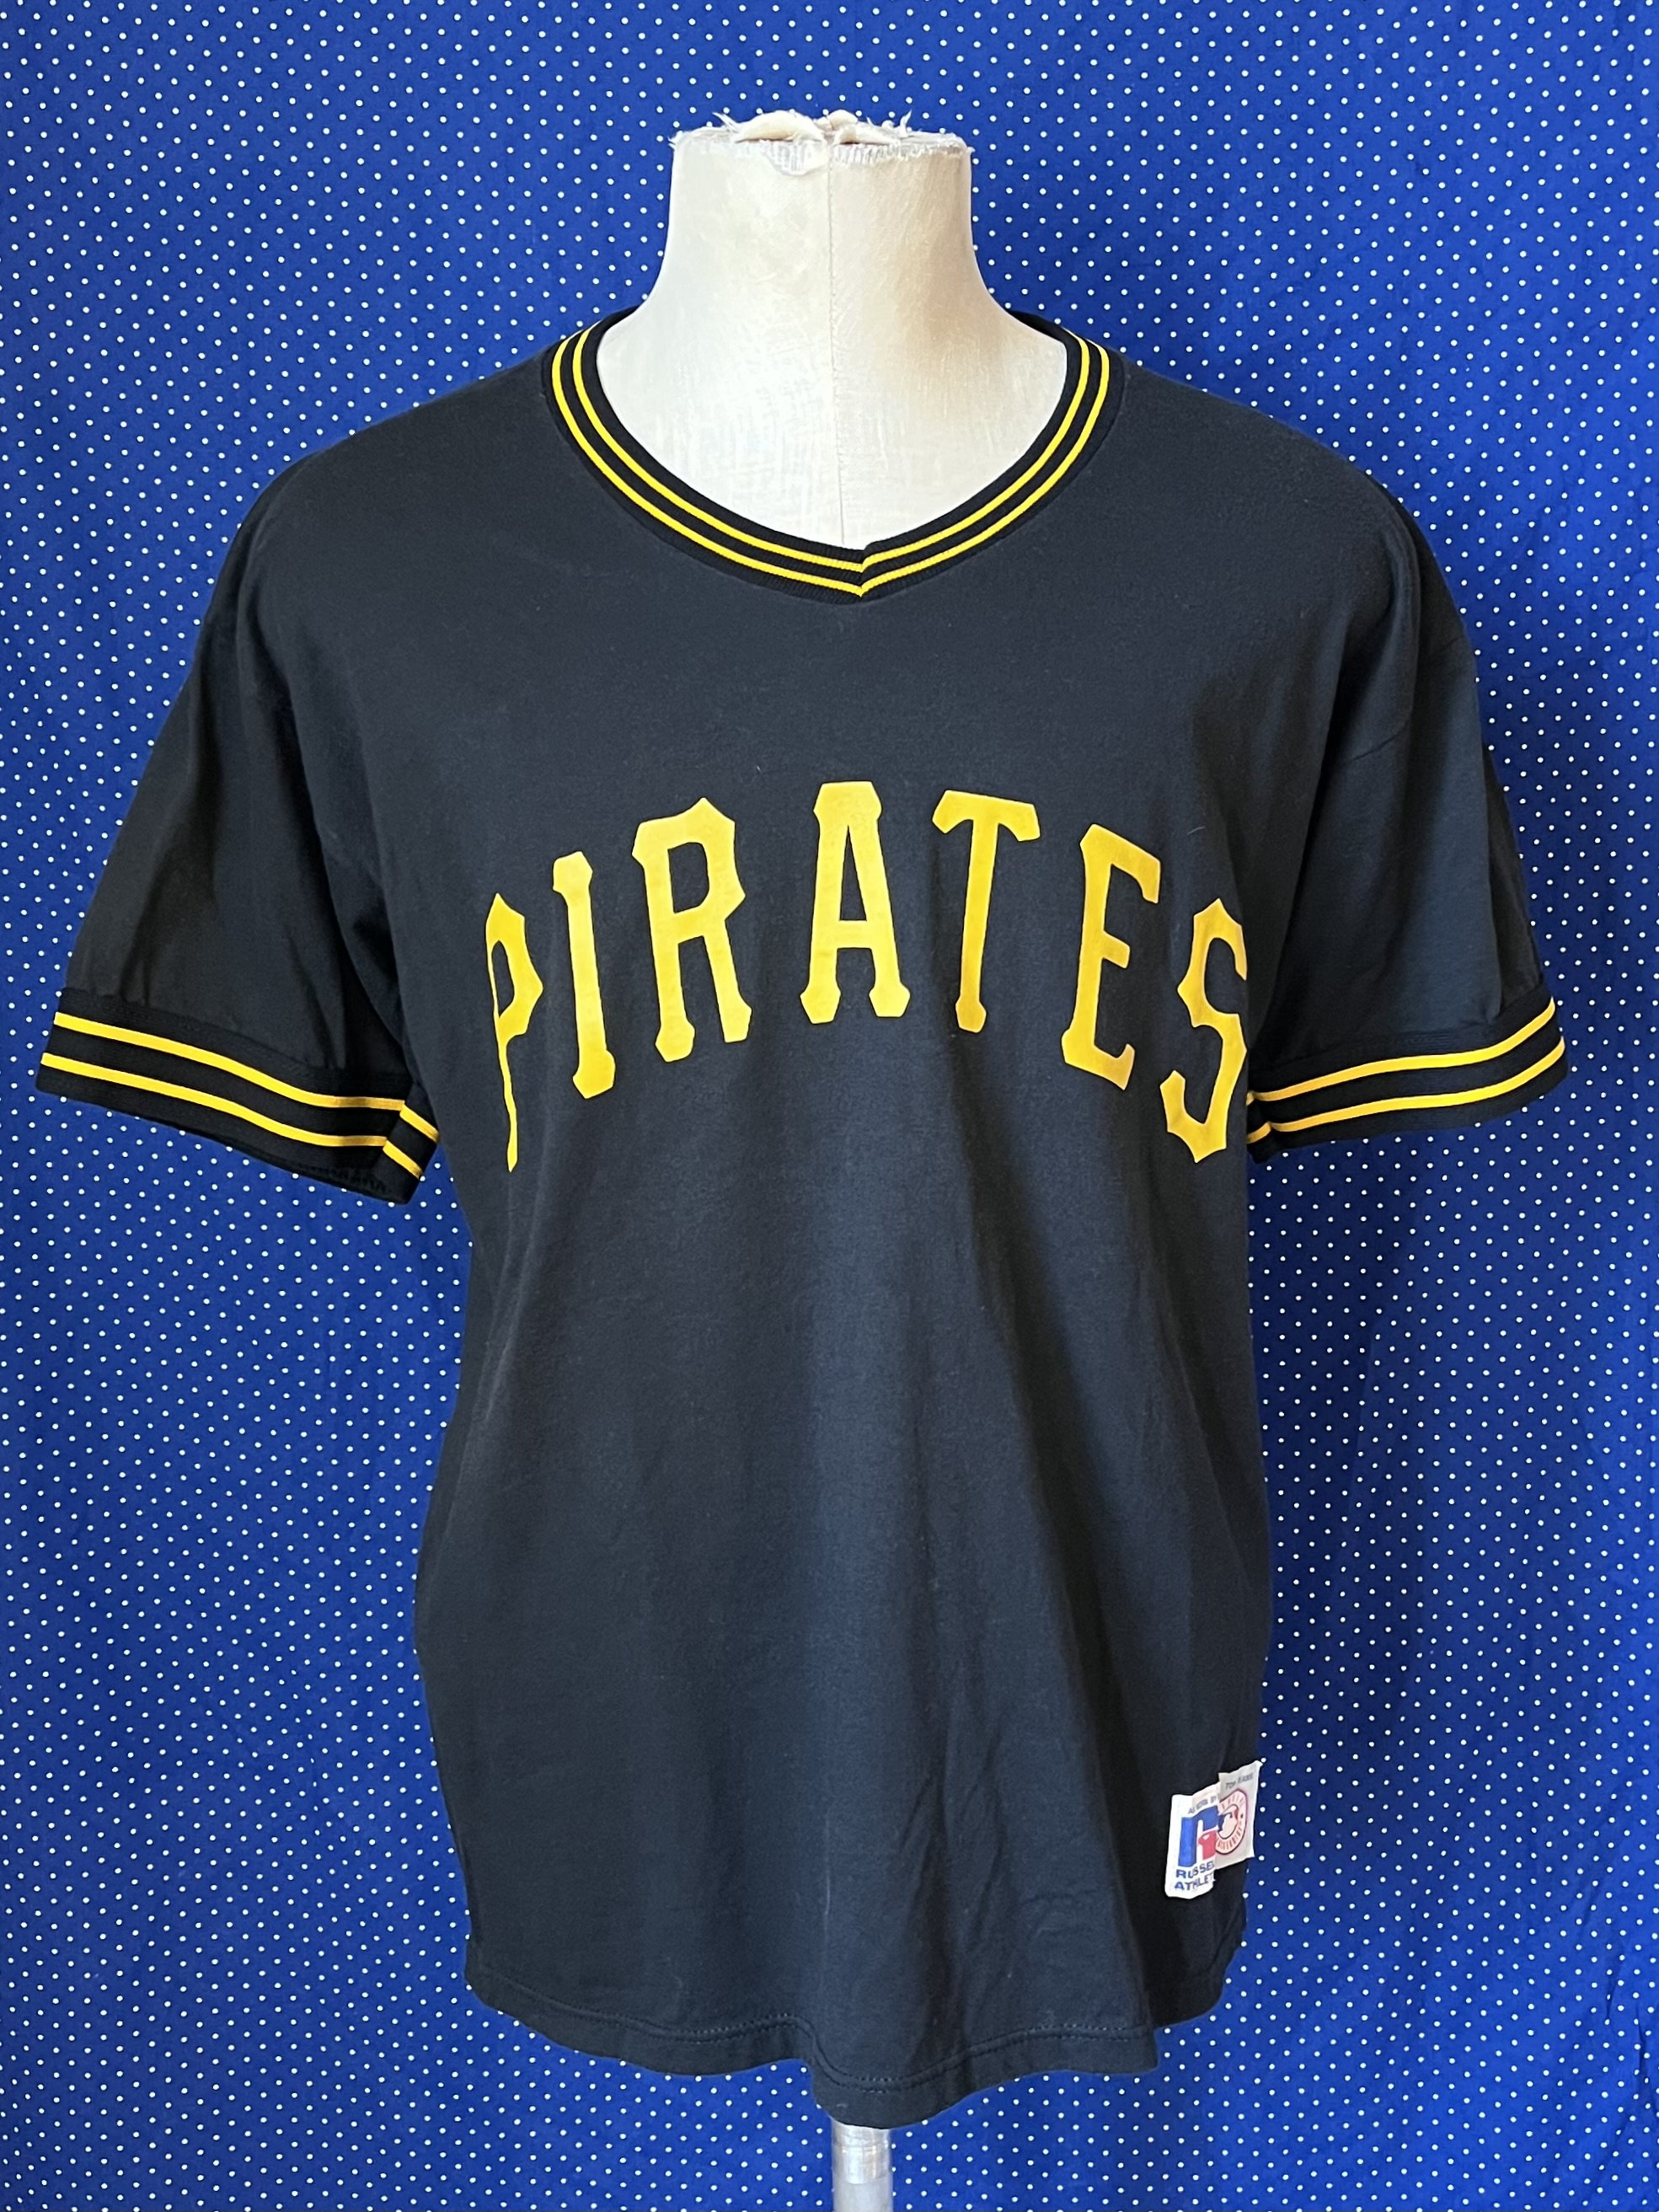 Jerseys - Pittsburgh Pirates Throwback Apparel & Jerseys